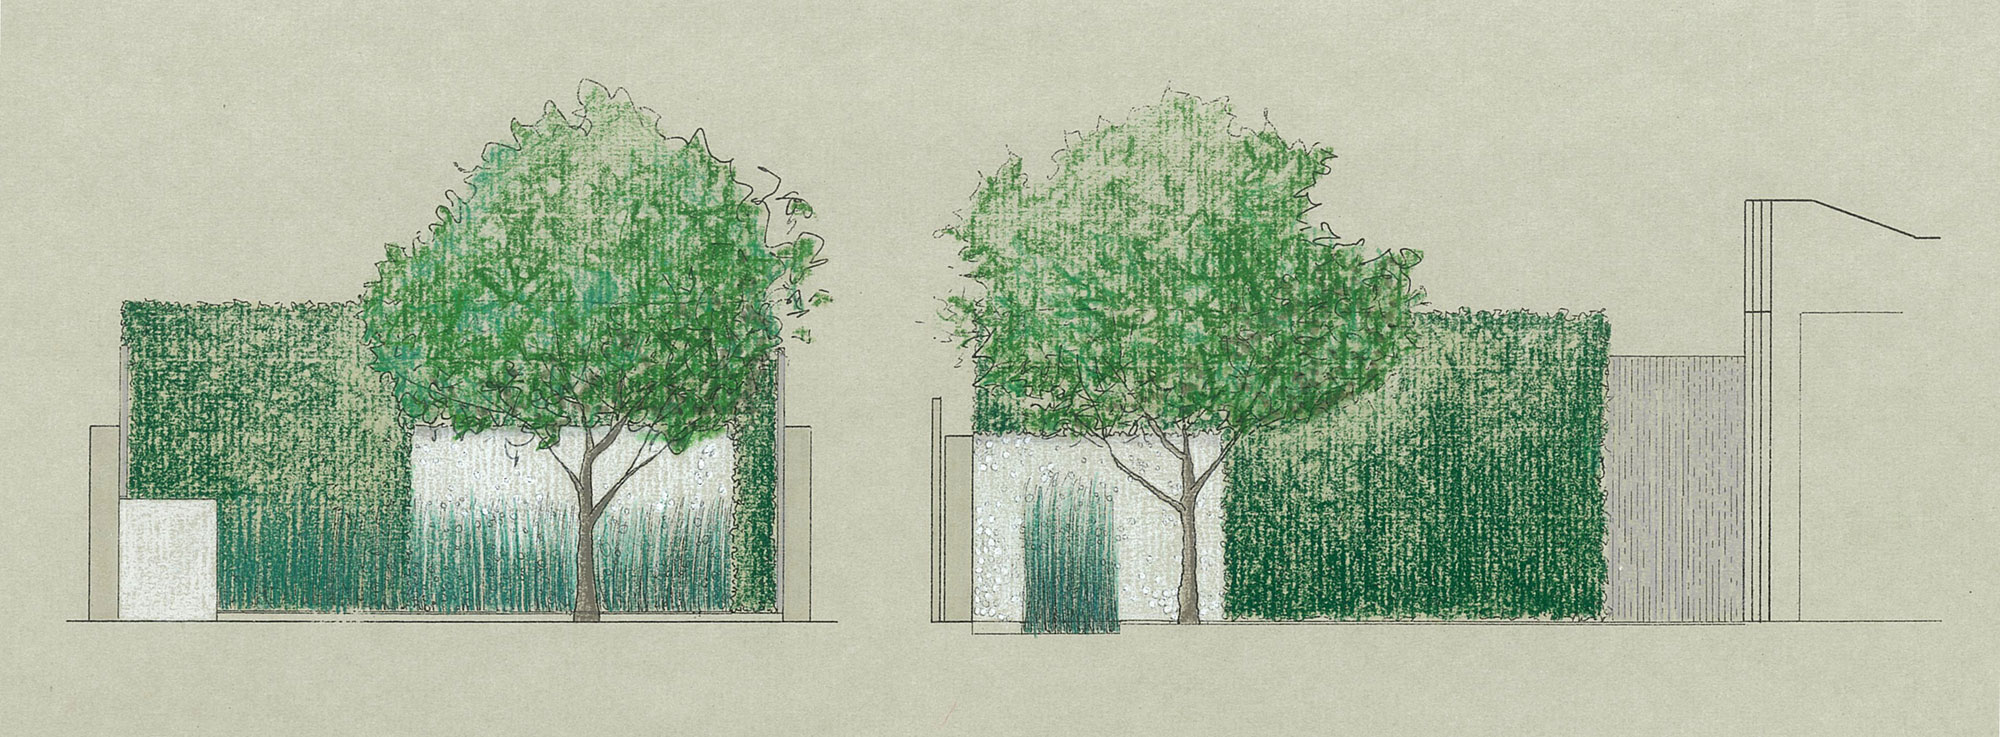 Fulham Courtyard drawing and plan - James Aldridge Landscape and Garden Design